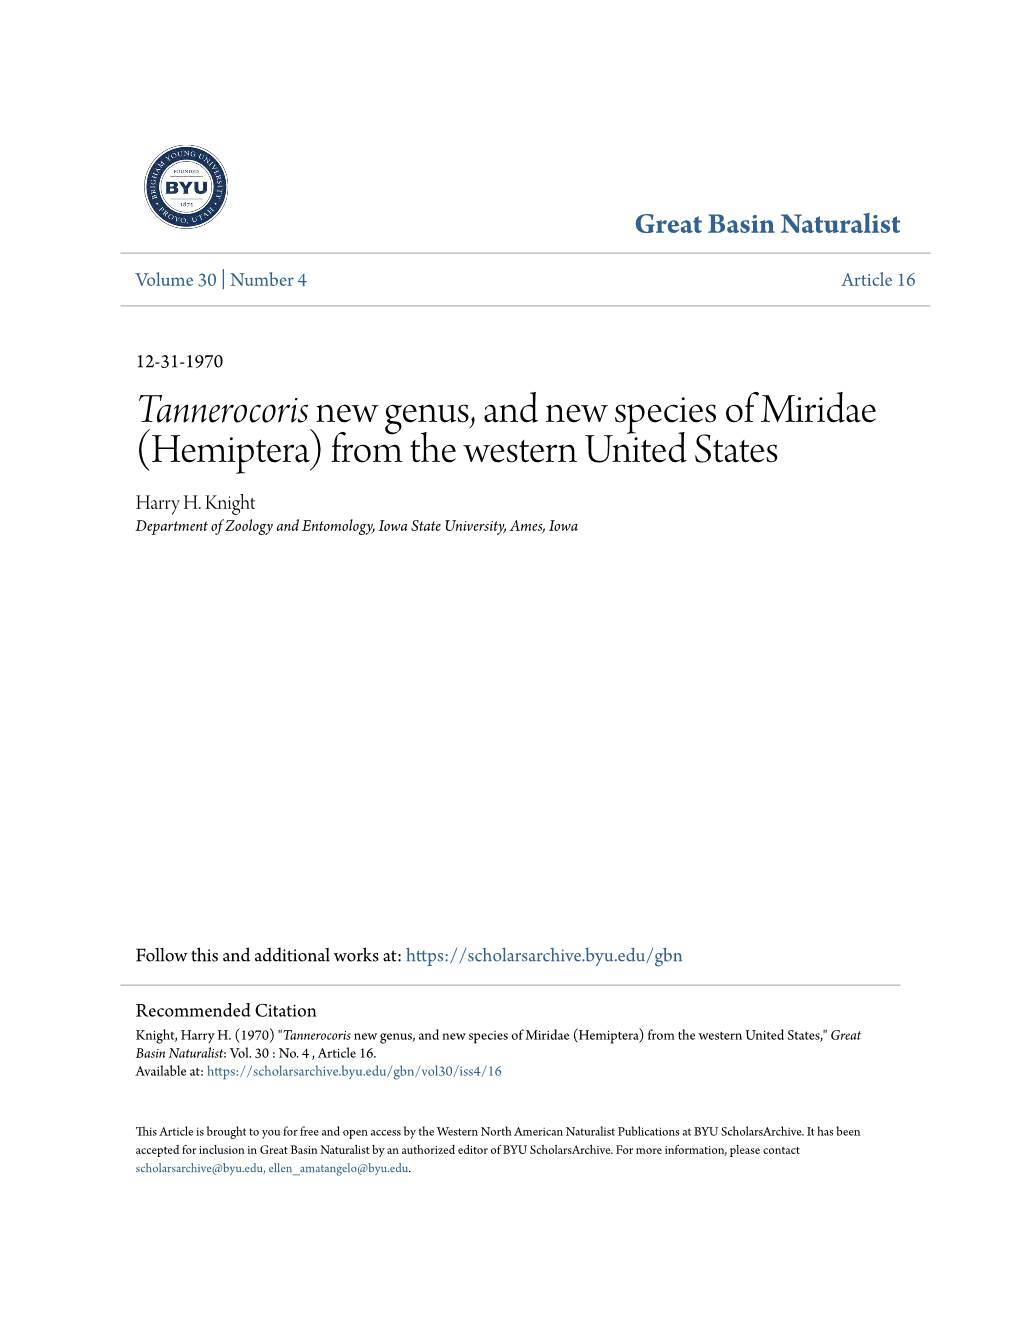 Tannerocoris New Genus, and New Species of Miridae (Hemiptera) from the Western United States Harry H